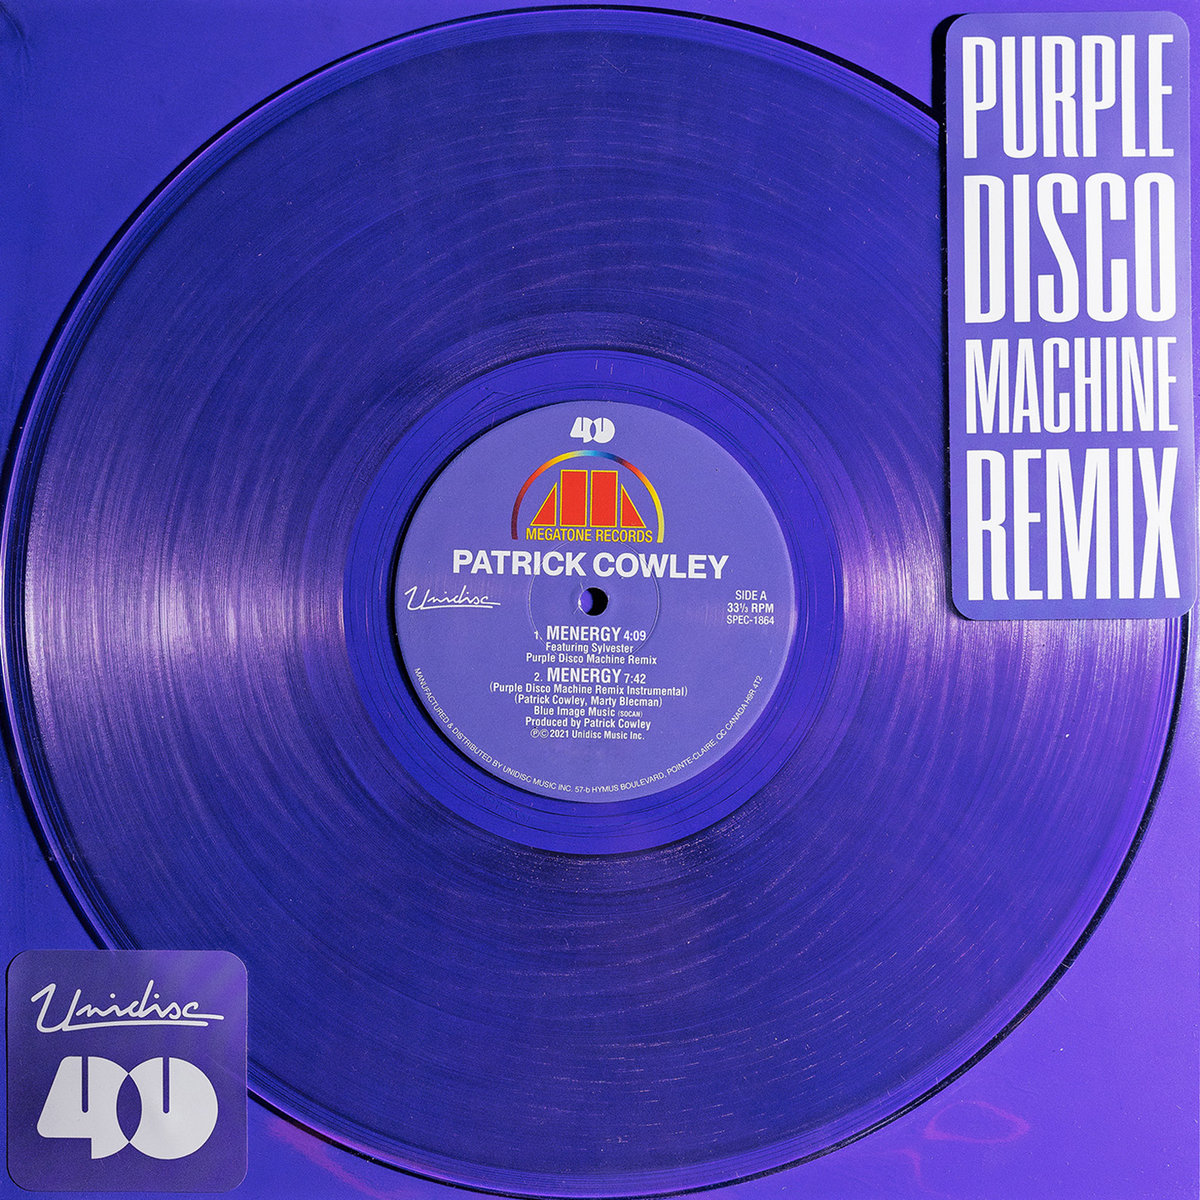 Purple disco machine рестарт на диското